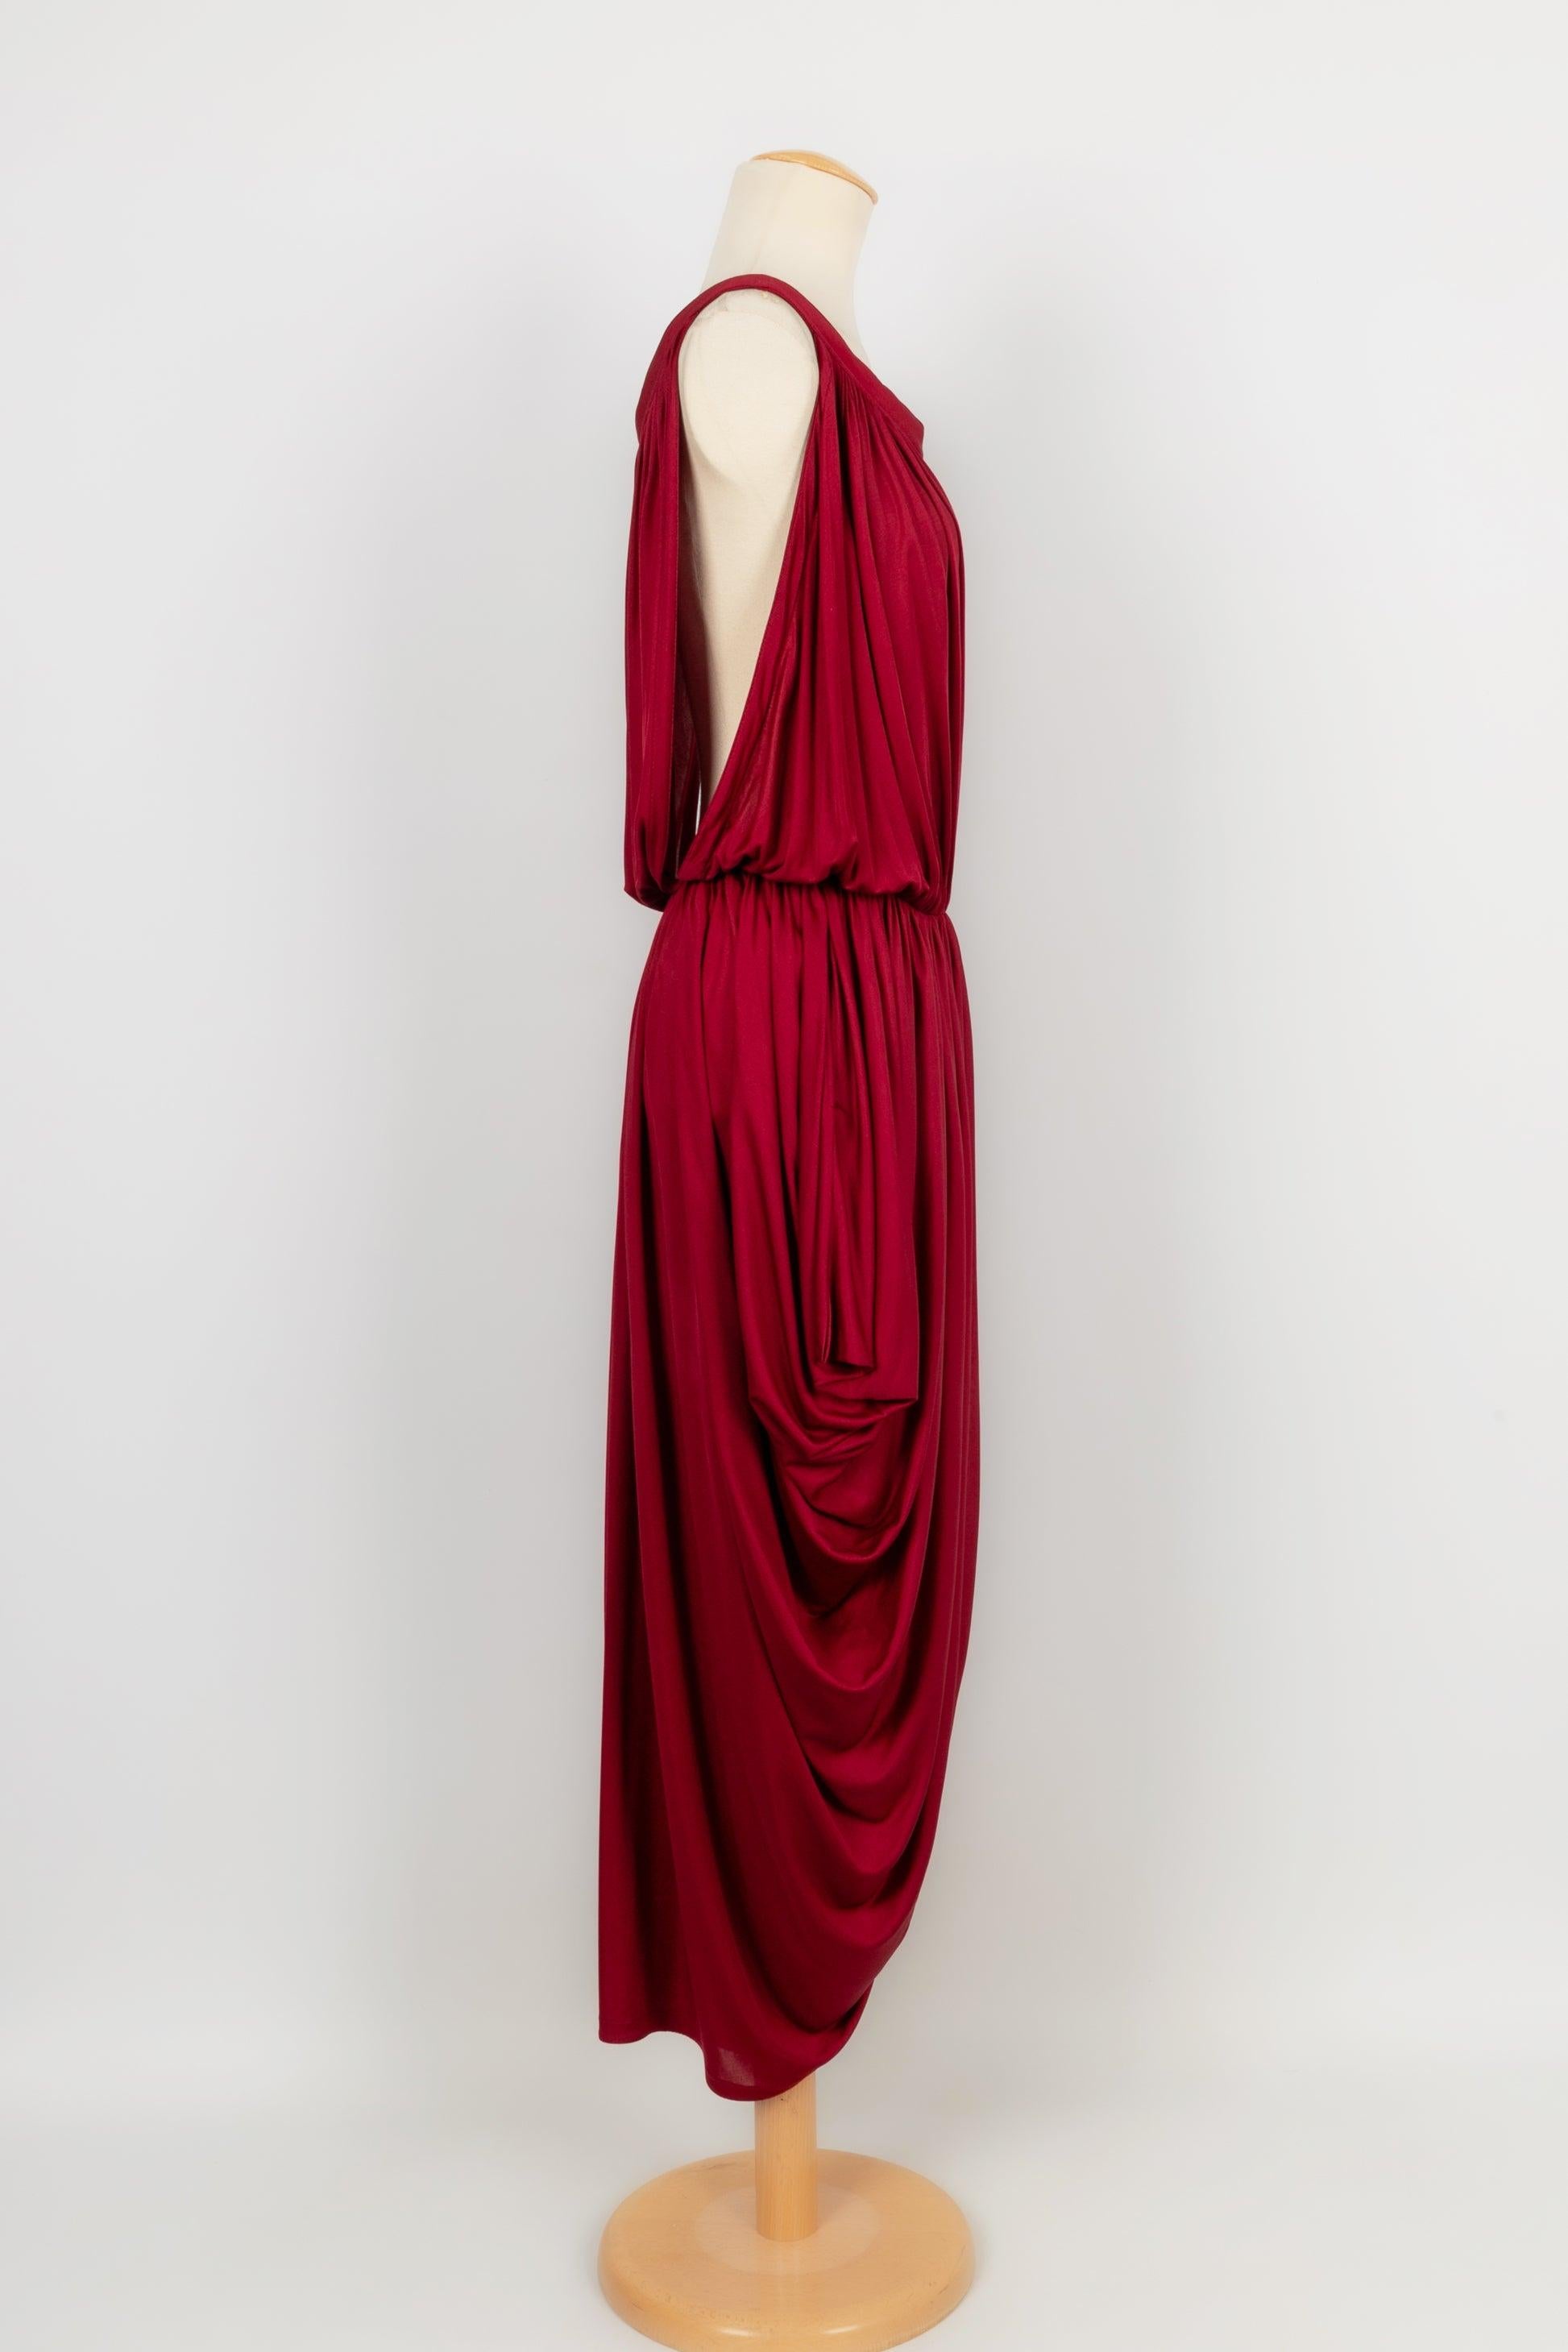 Women's Gianni Versace Silk Pleated Dress, 1980s For Sale